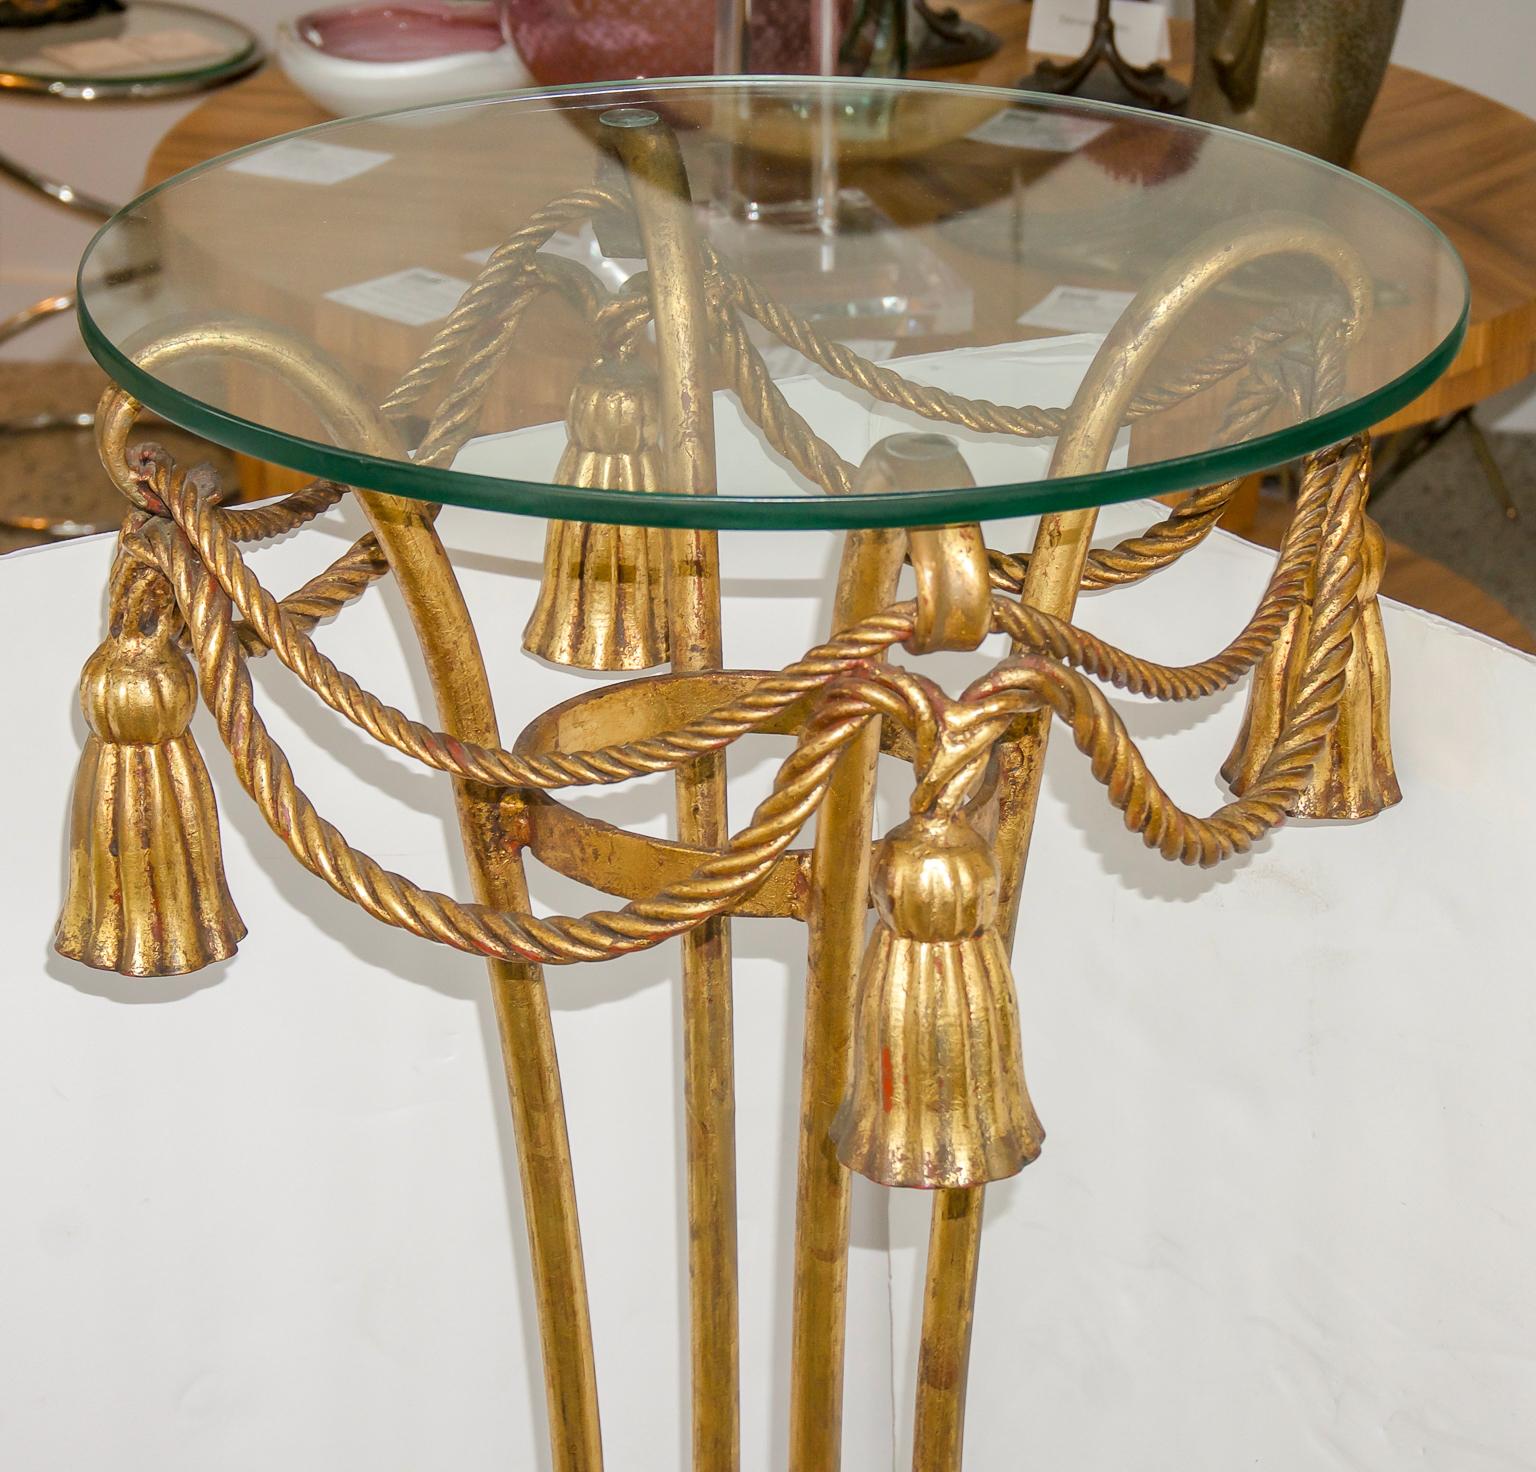 Pair of decorative midcentury Italian gilt metal rope and tassel plant stand.